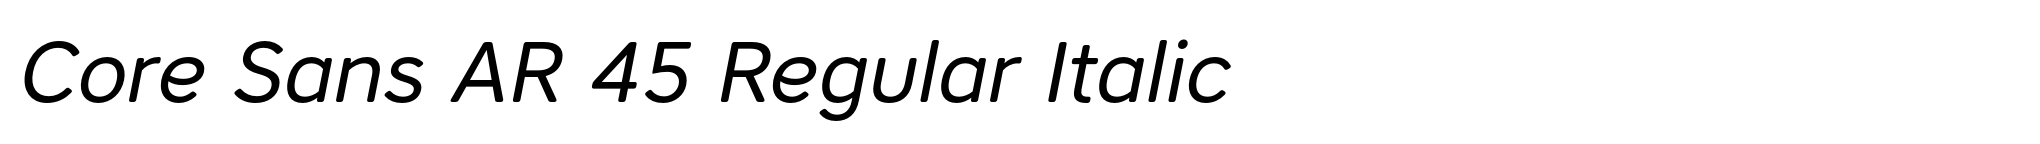 Core Sans AR 45 Regular Italic image